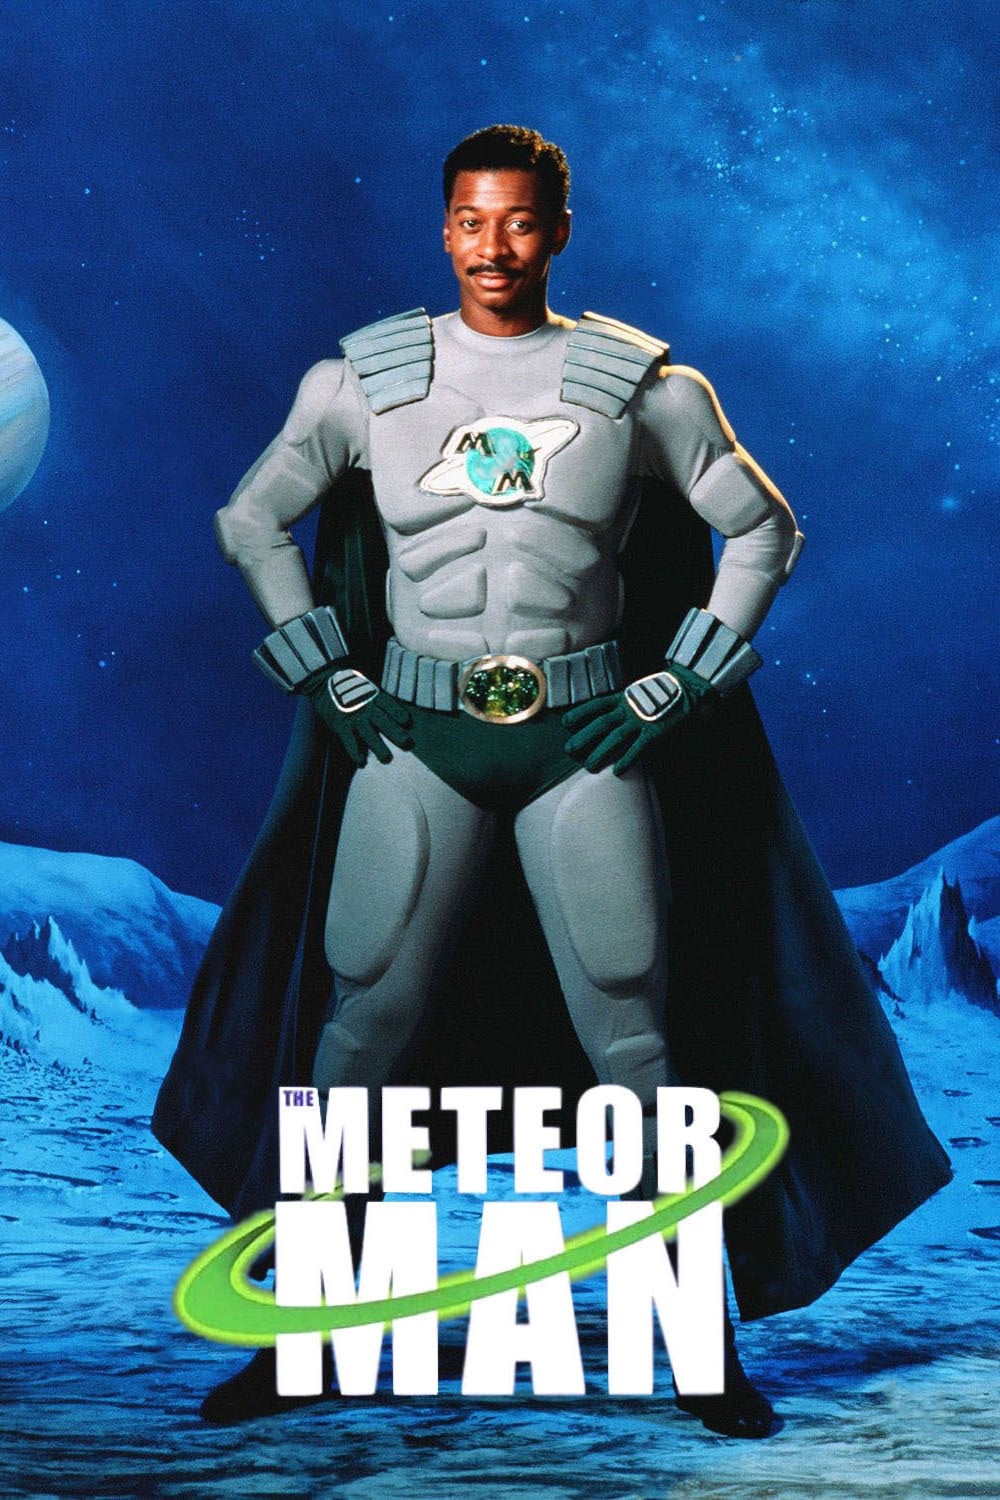 Meteor Man movie High Quality Metal Fridge Magnet 3x4 8974 